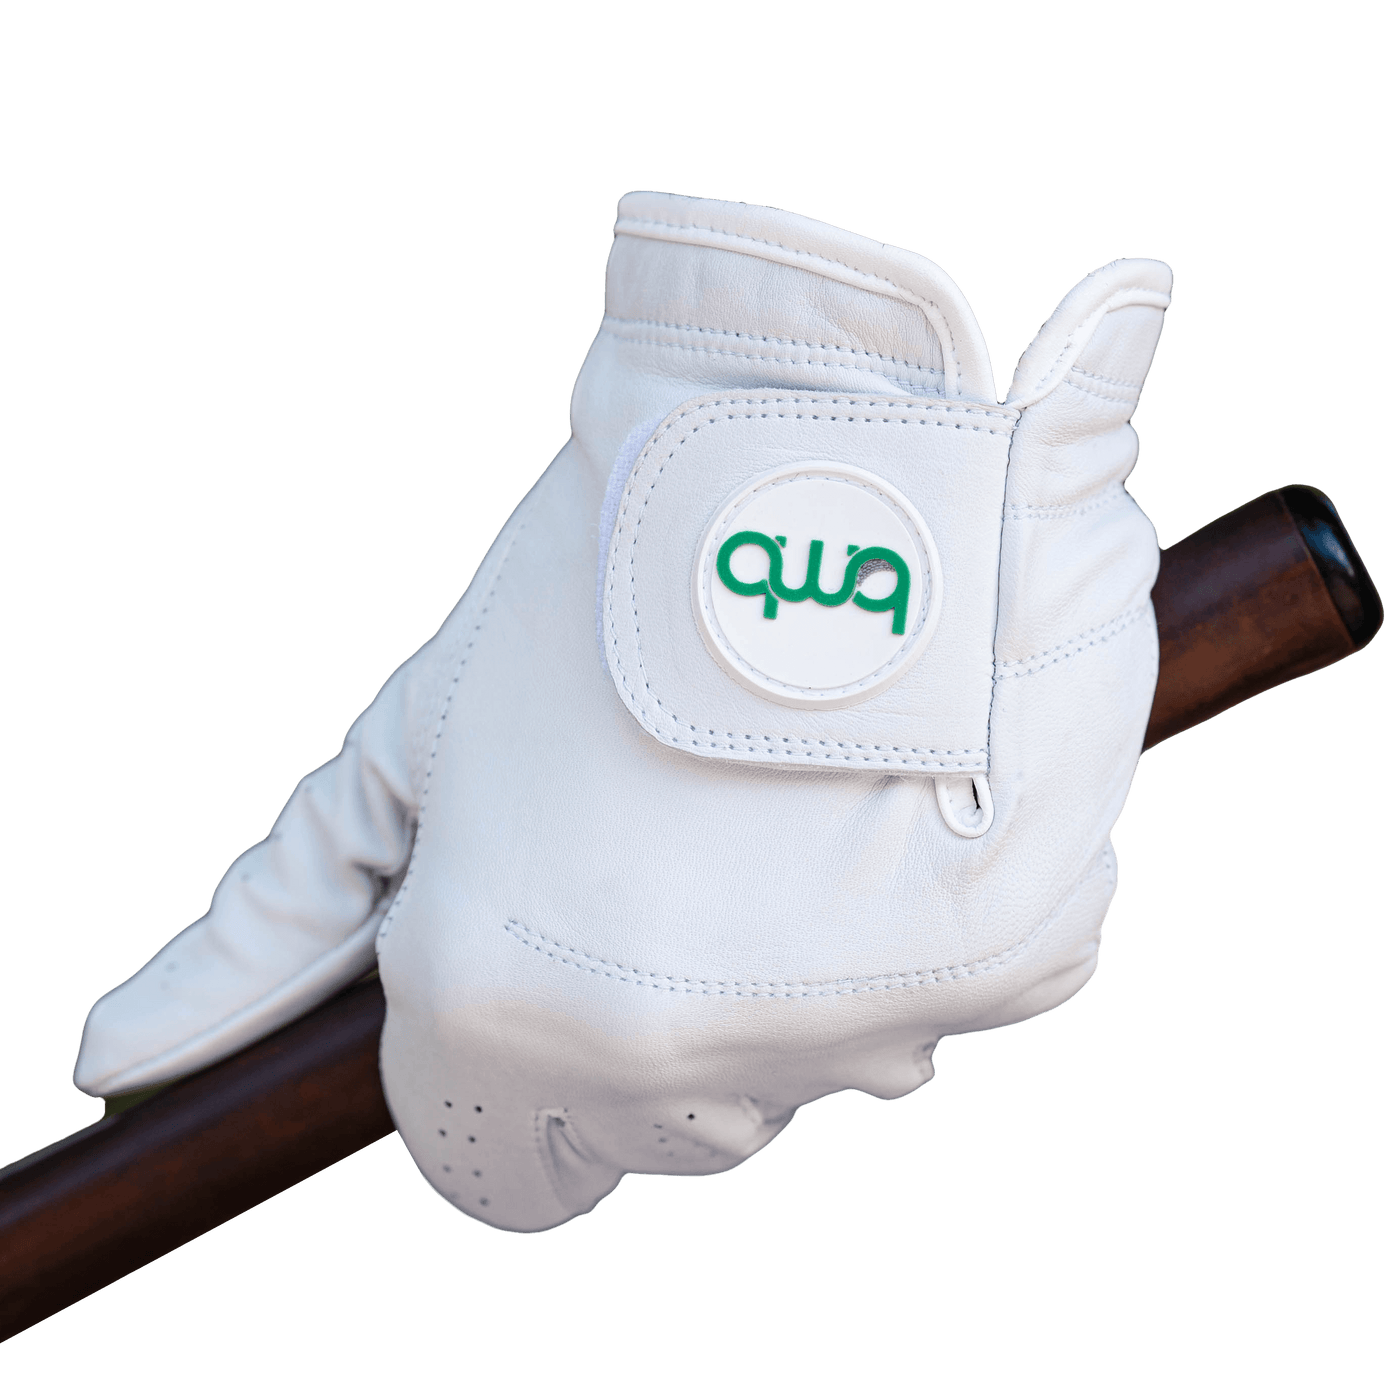 BMB Golf Glove